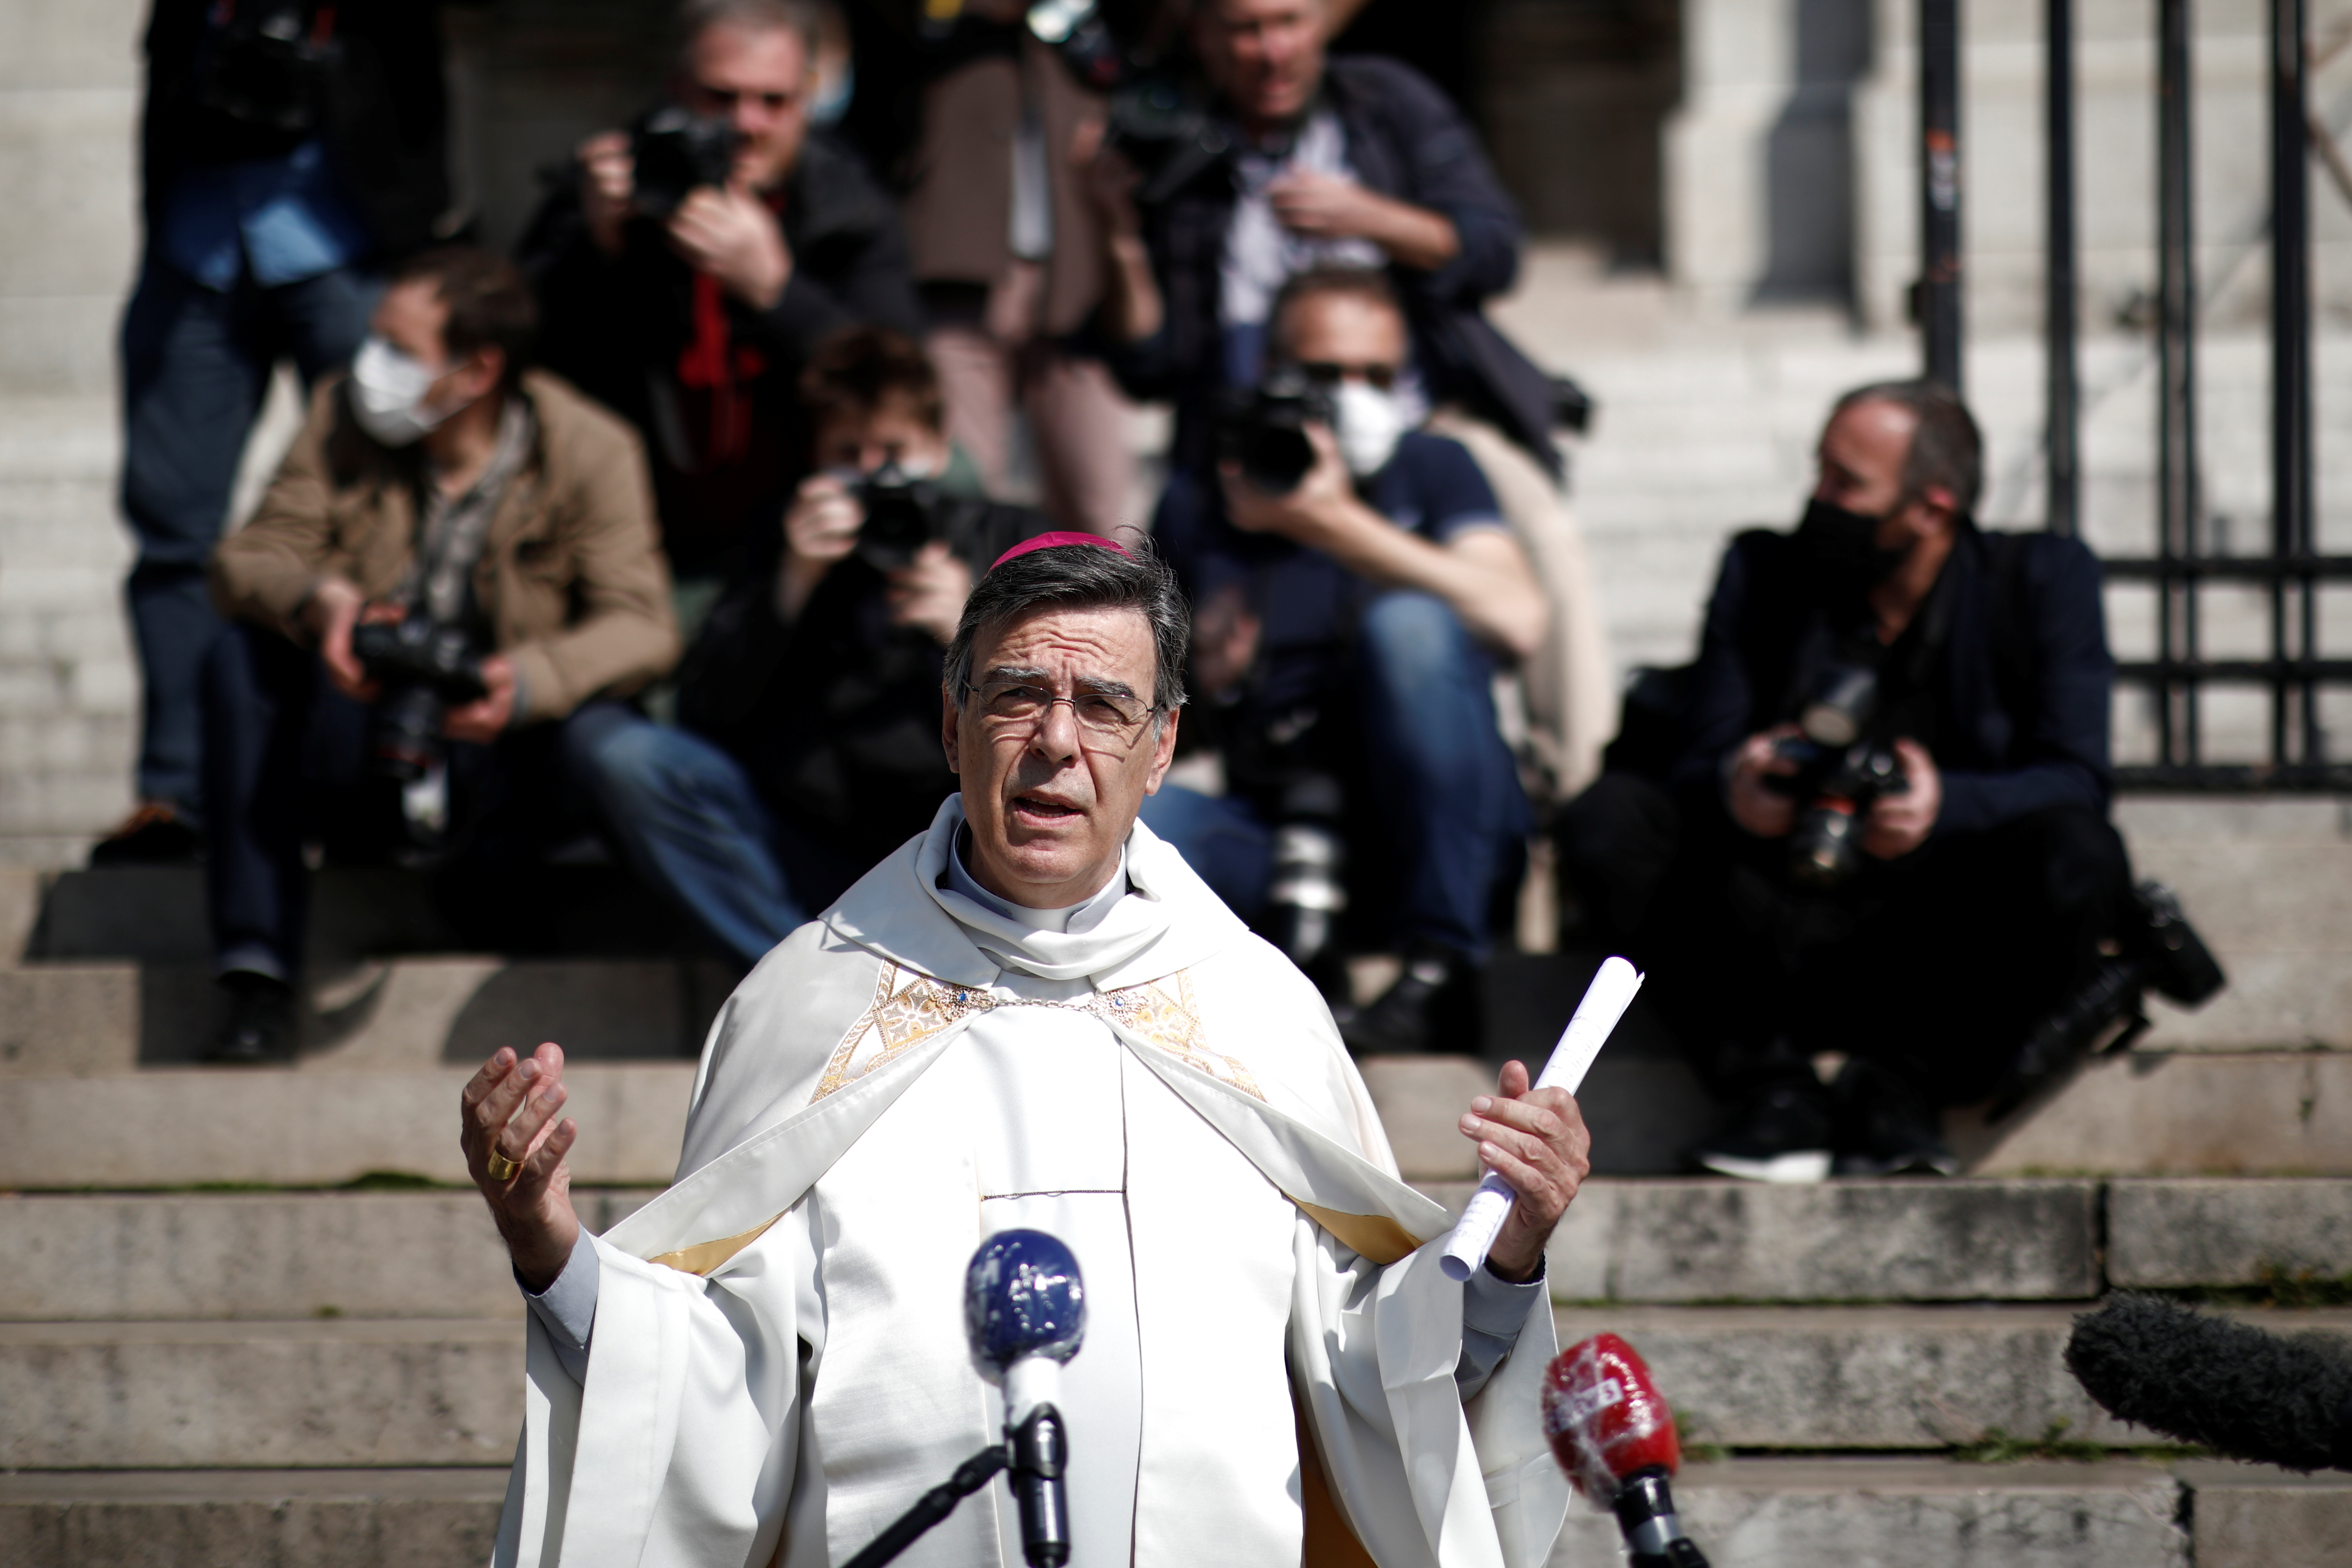 Paris' archbishop blesses the capital as part of Easter ceremonies